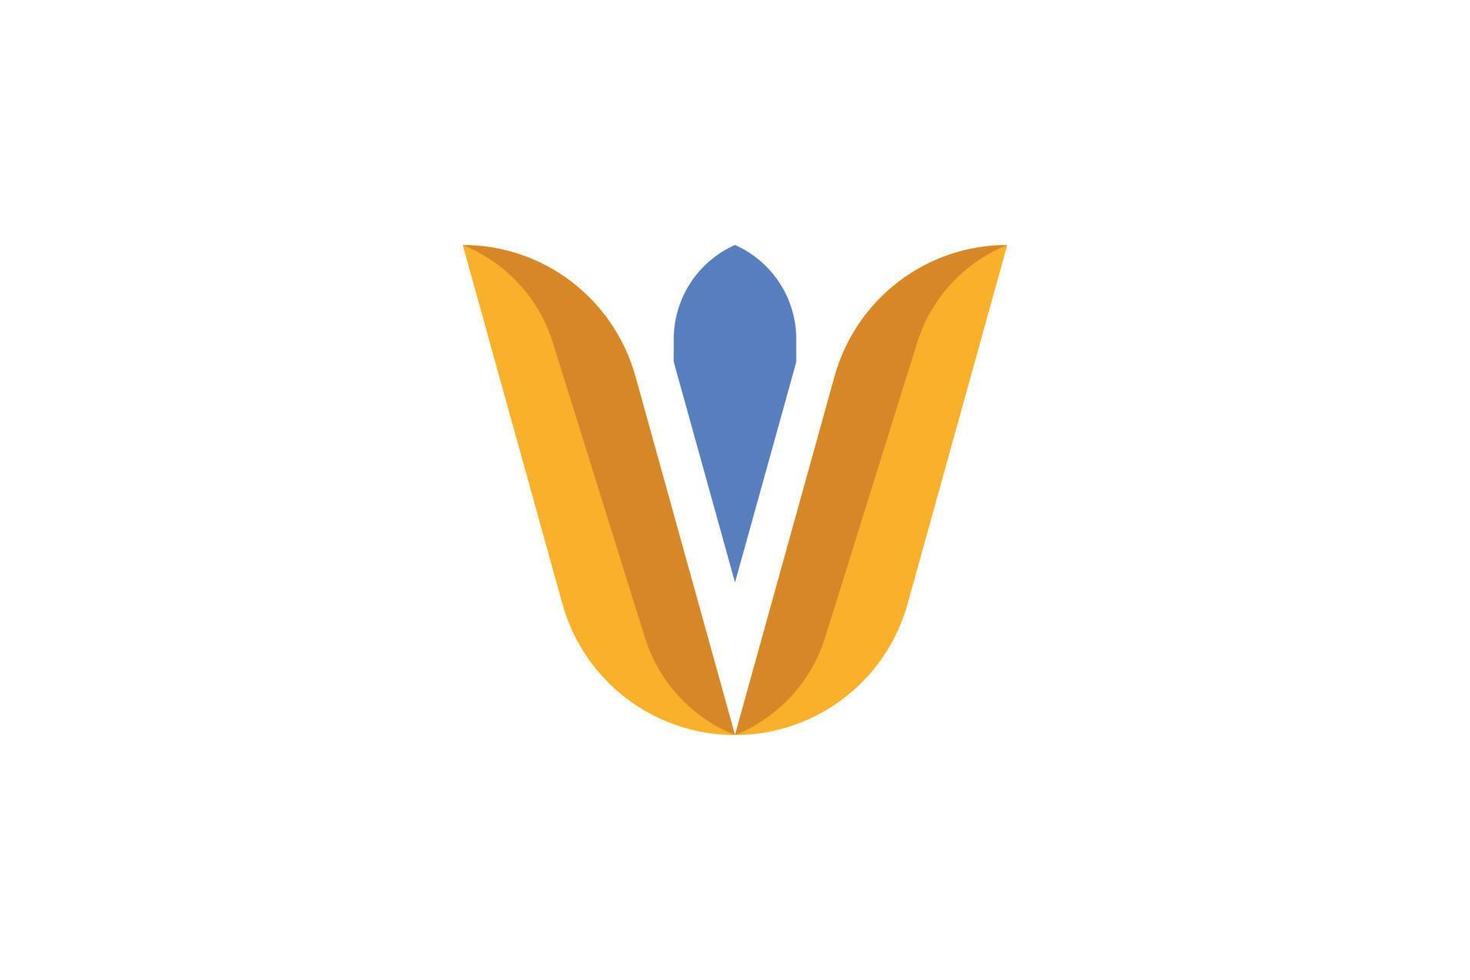 W Letter Logo Template vector